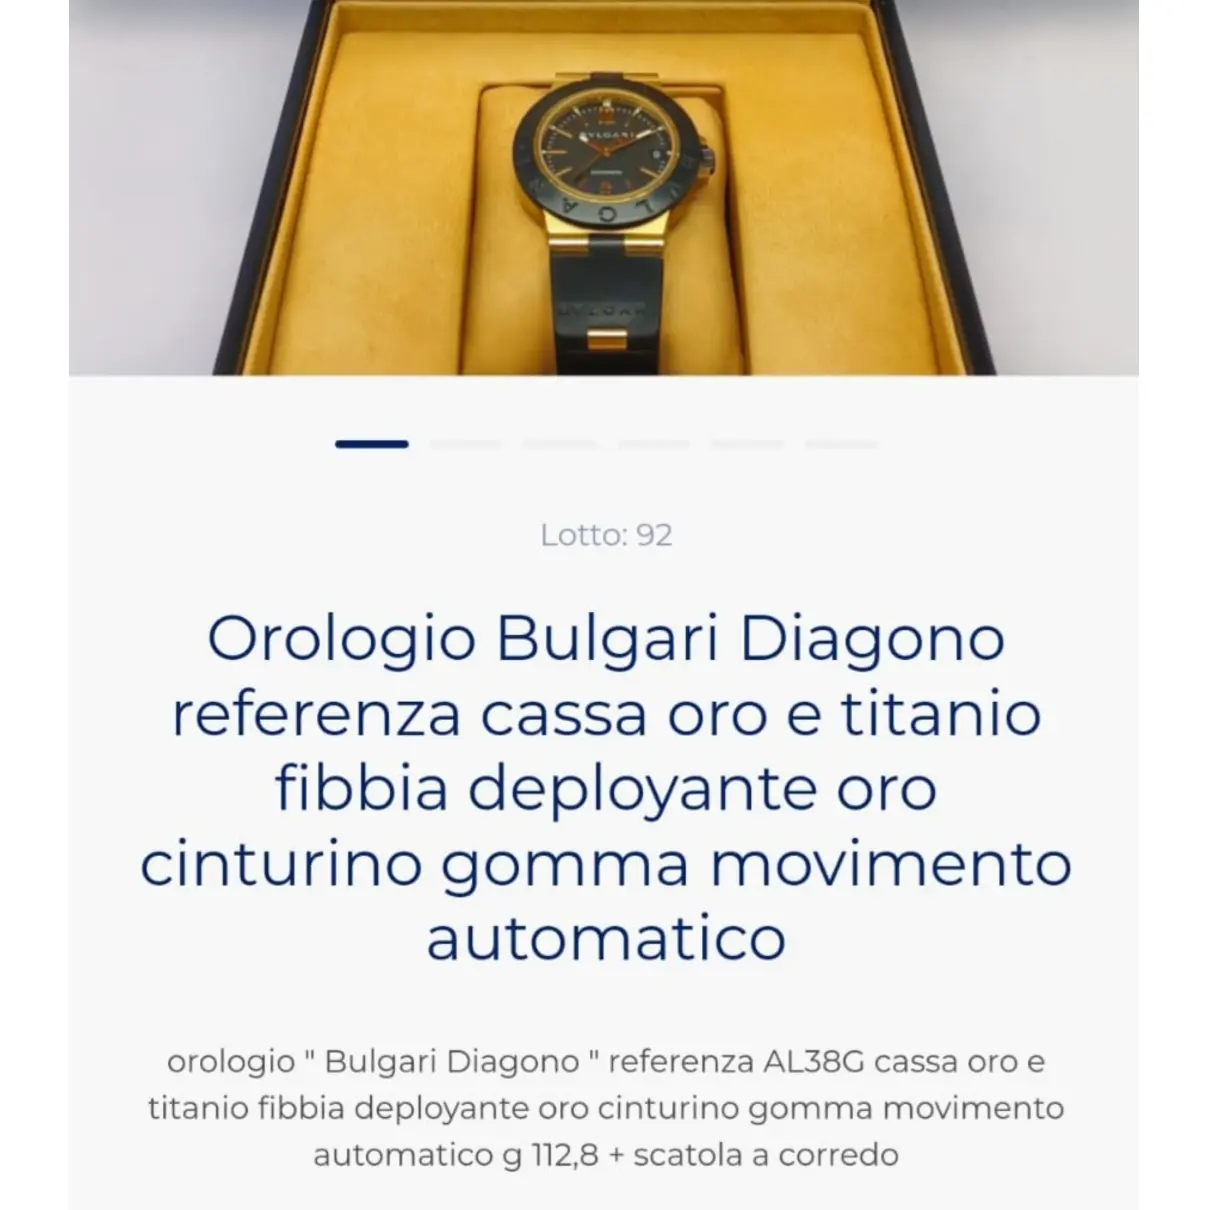 Buy Bvlgari Gold watch online